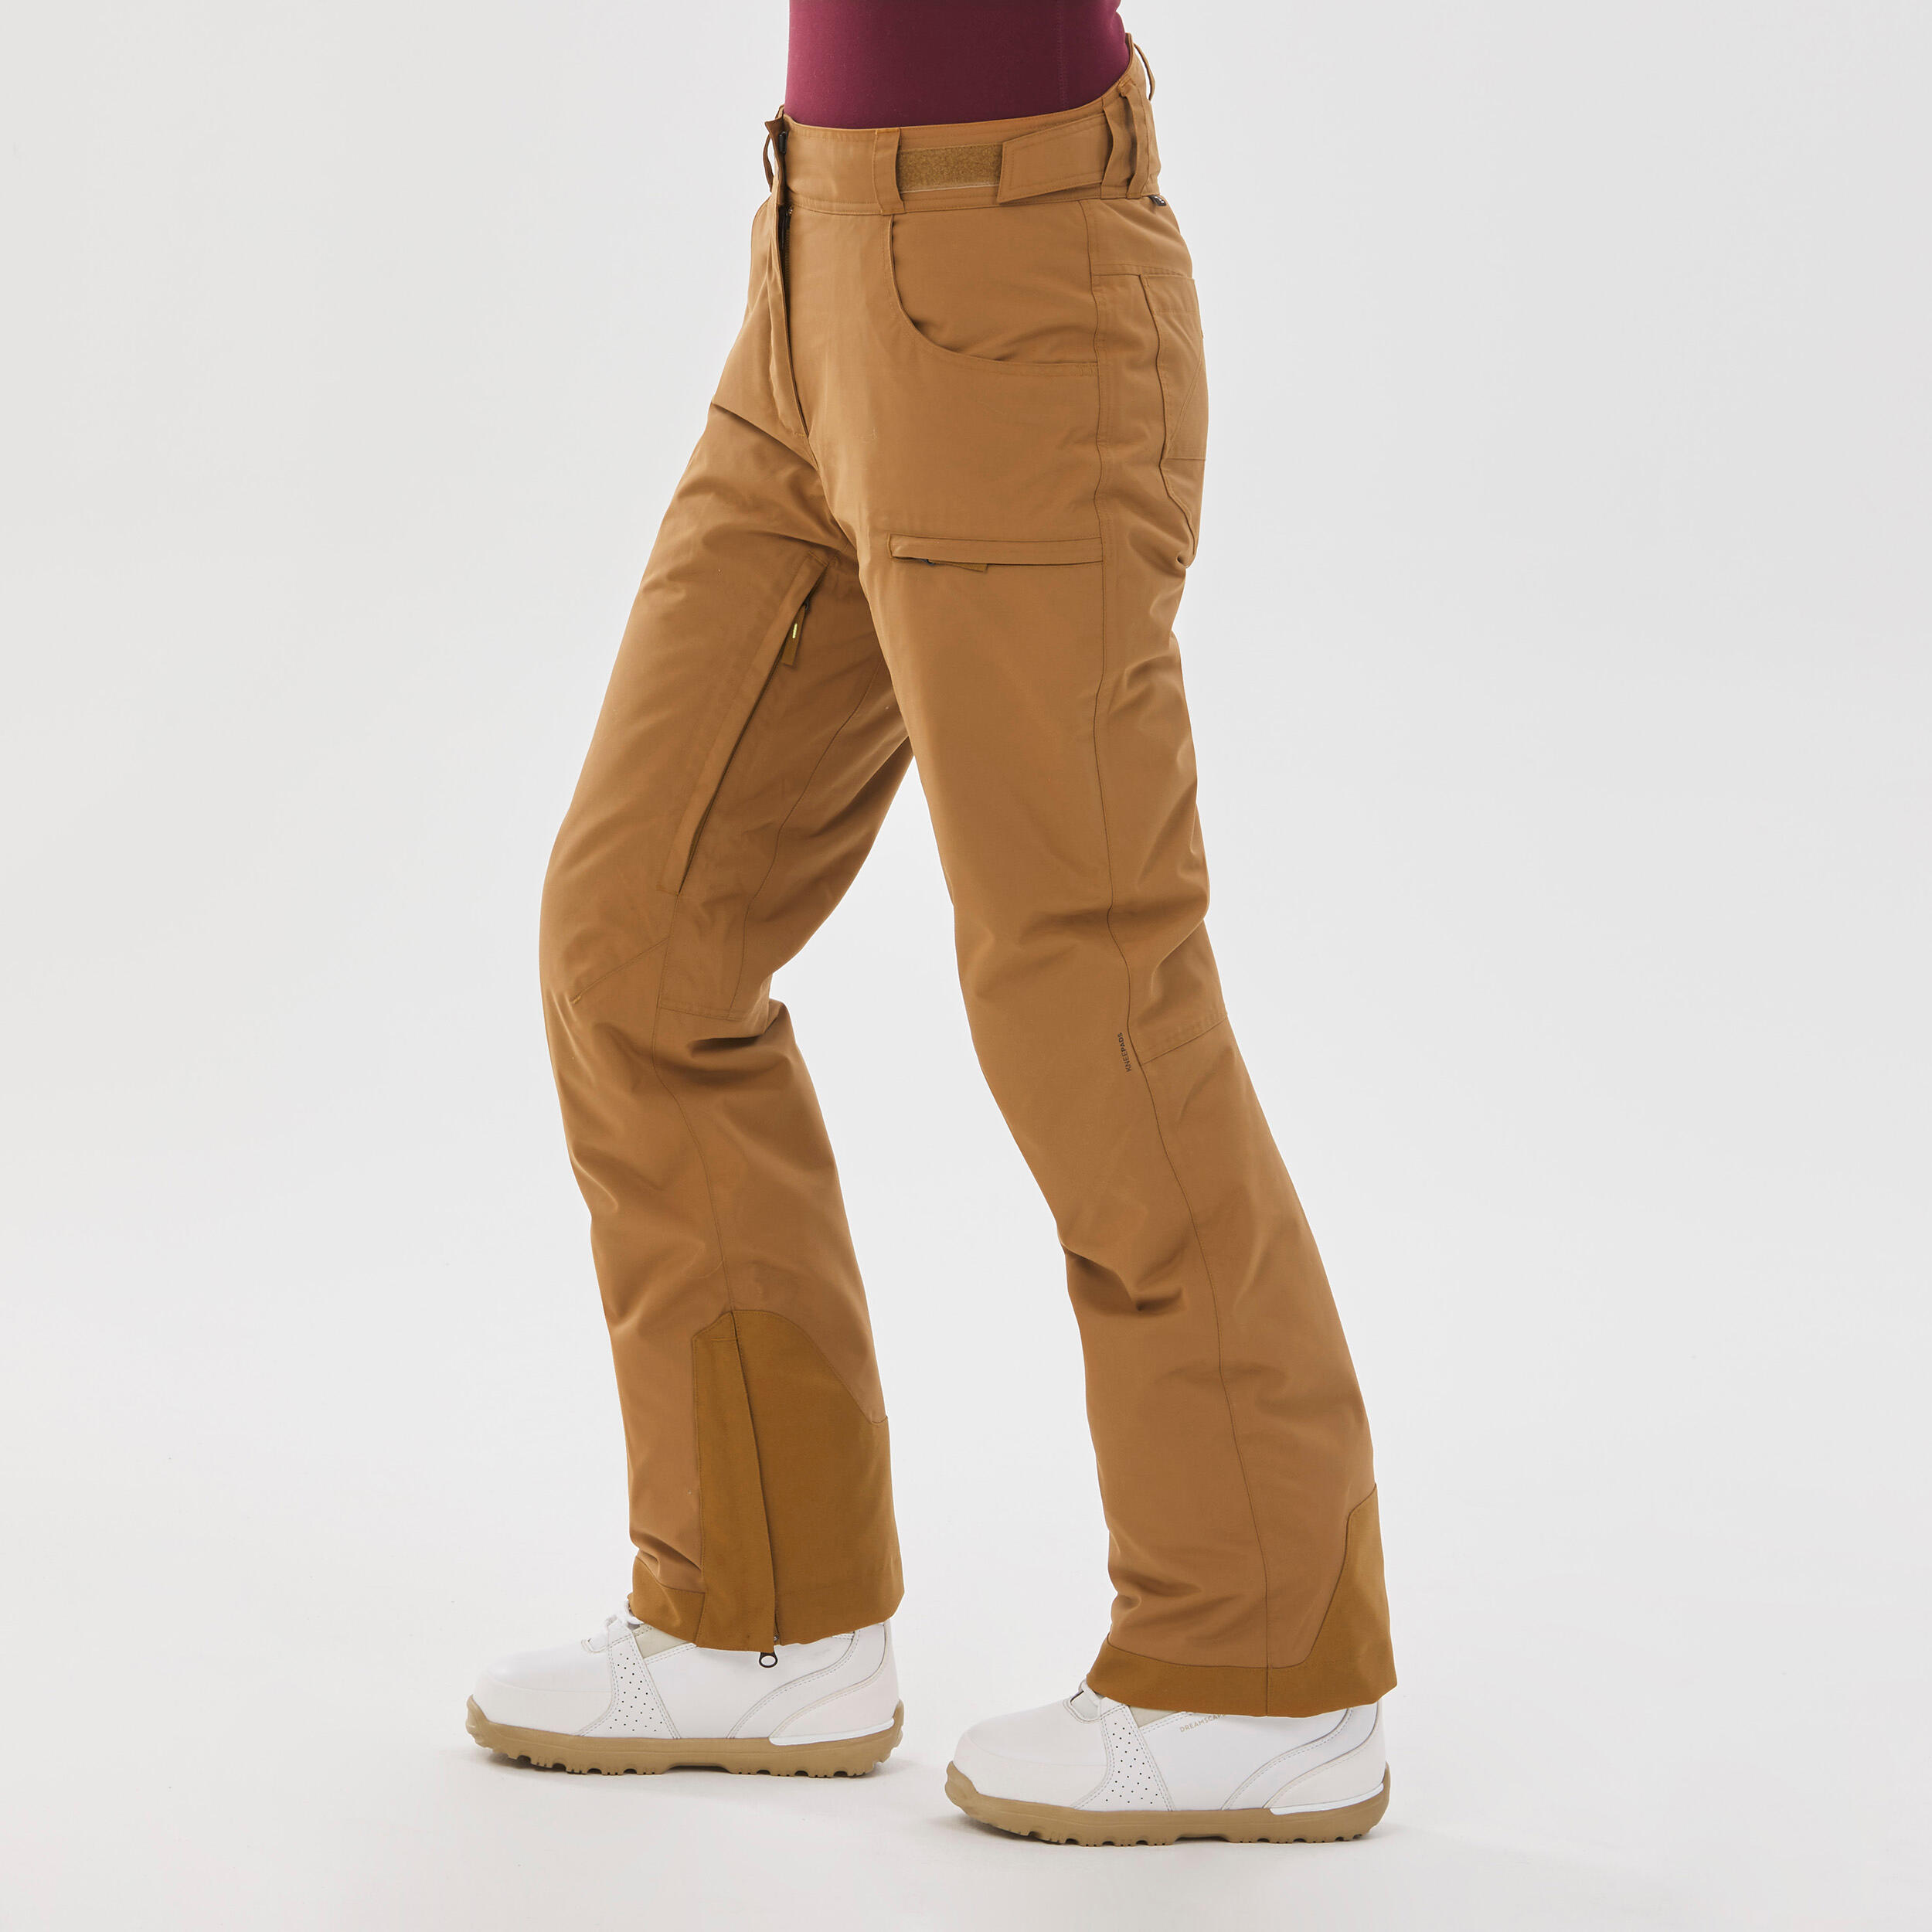 Women's Snowboard Pants – SNB 500 Brown - Dark cinnamon